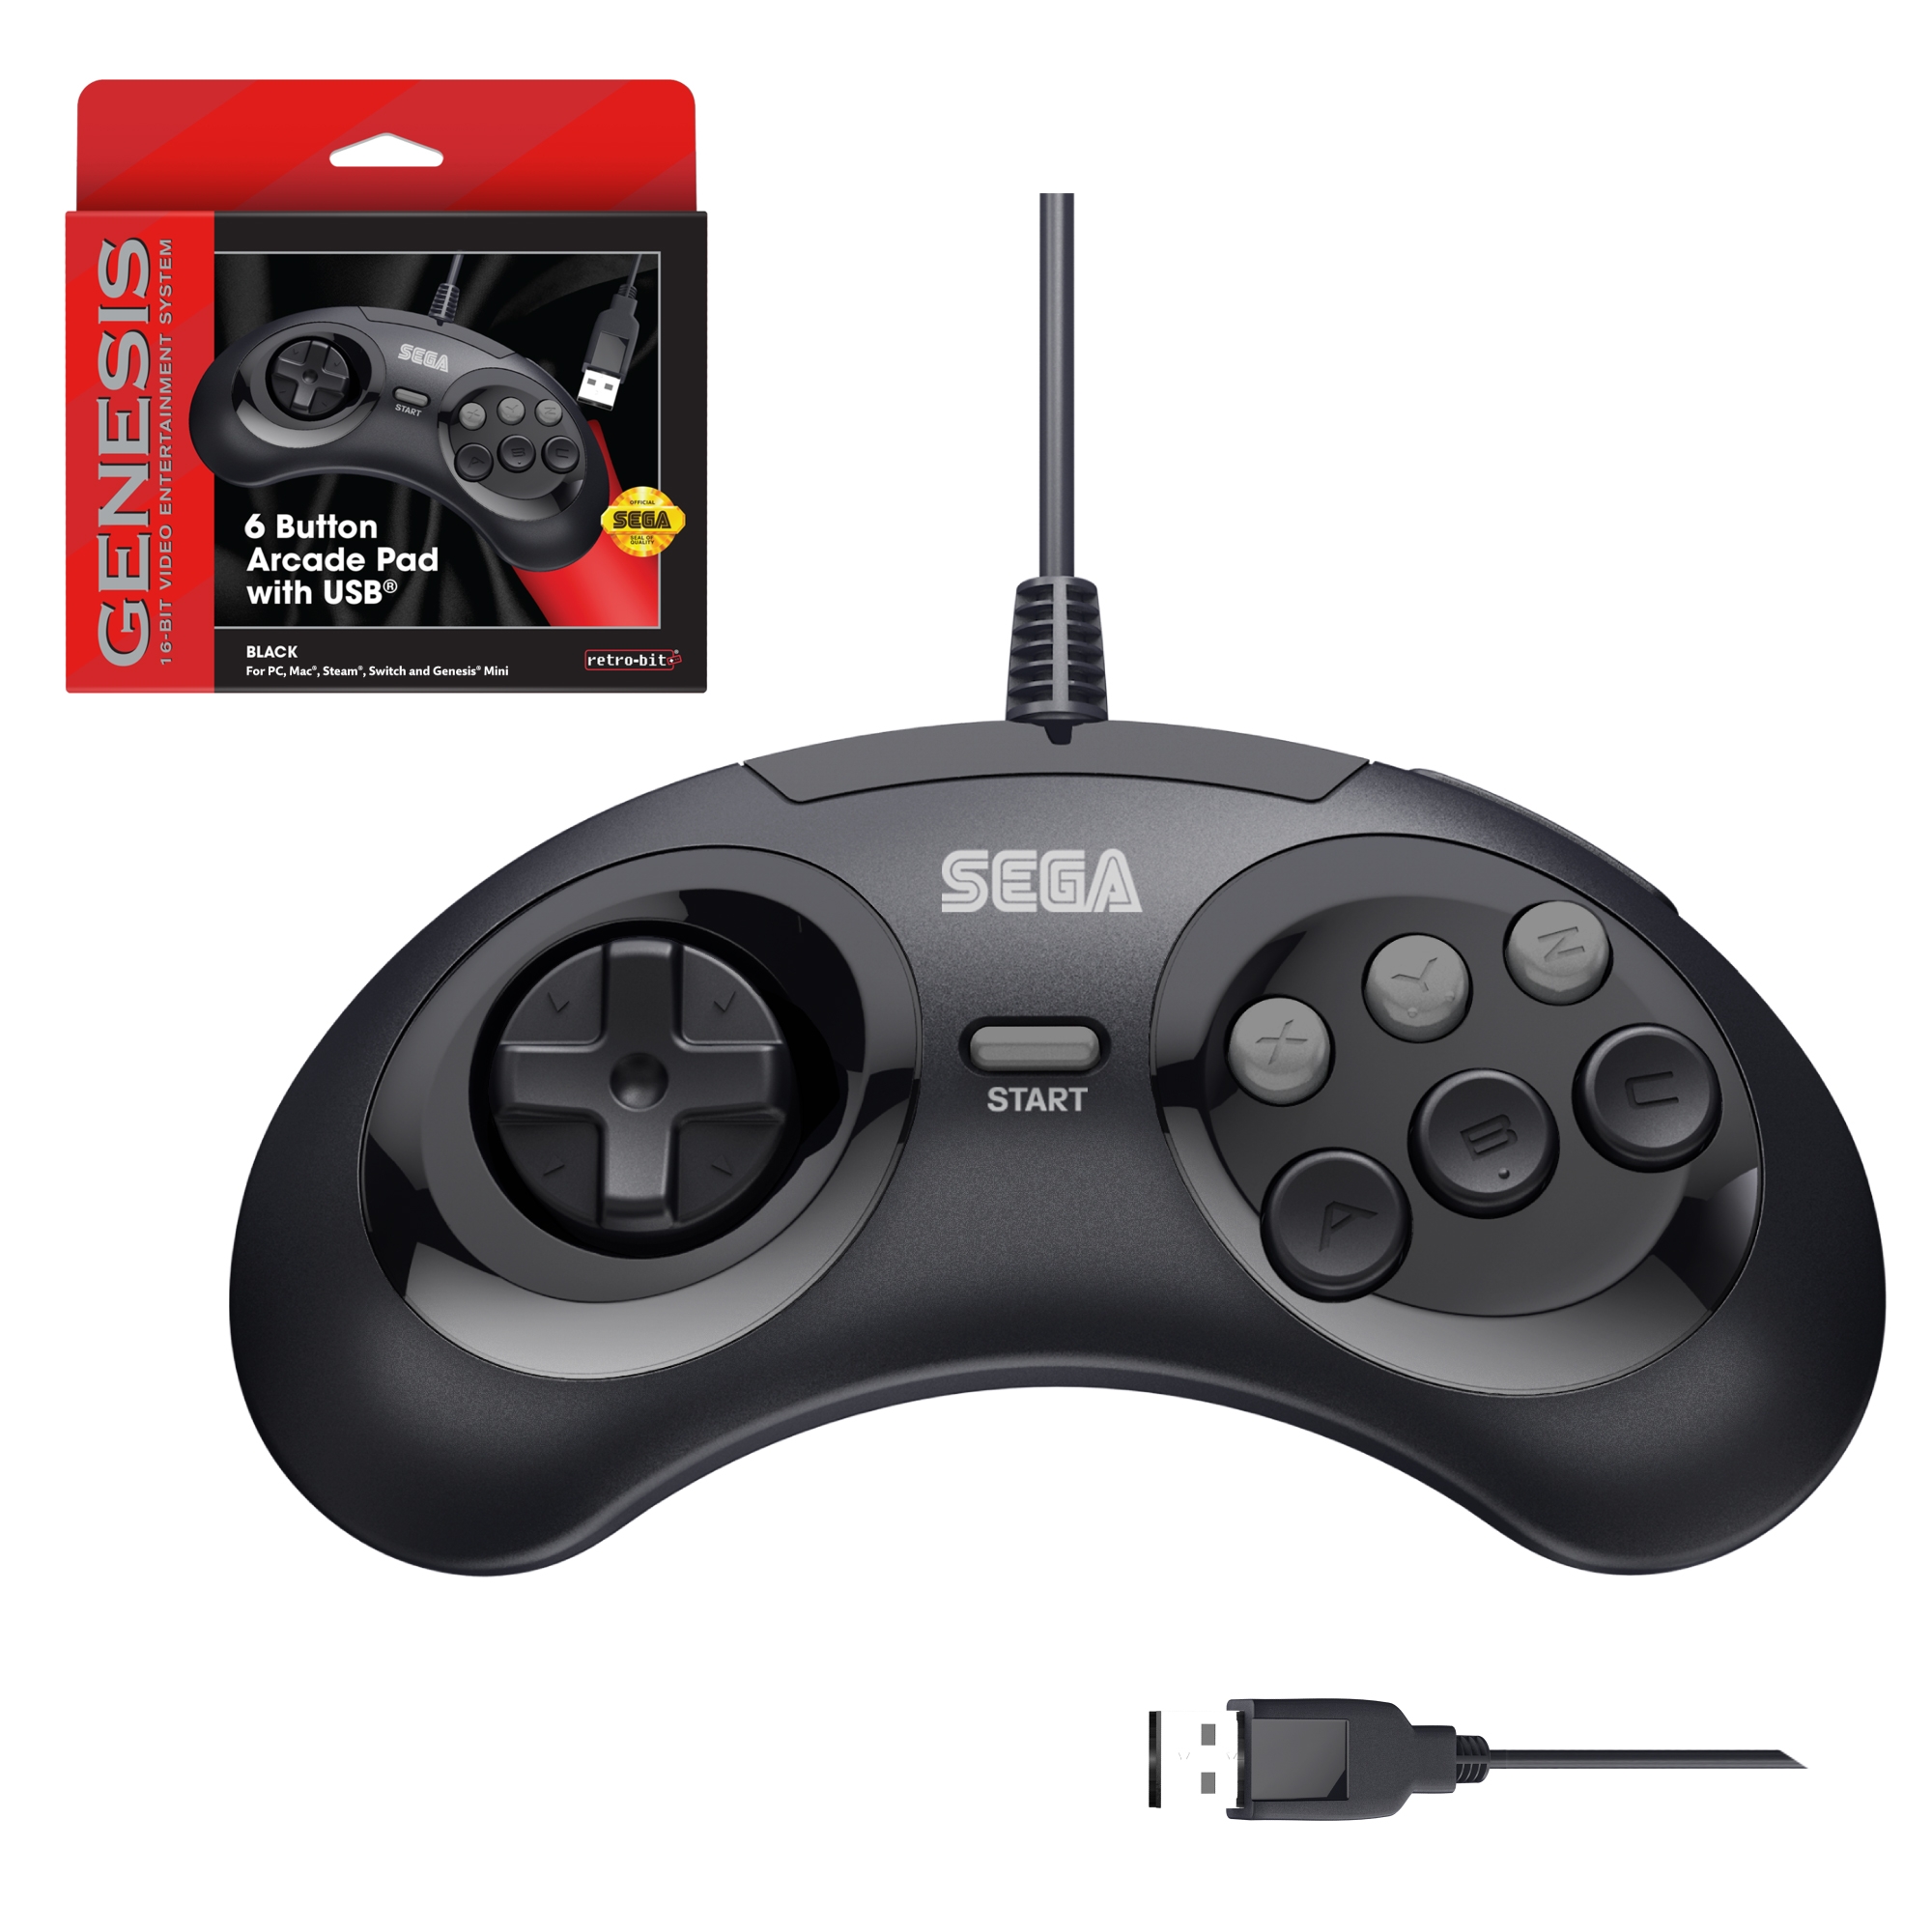 SEGA Genesis Mini 6 Button USB Arcade Pad - Black